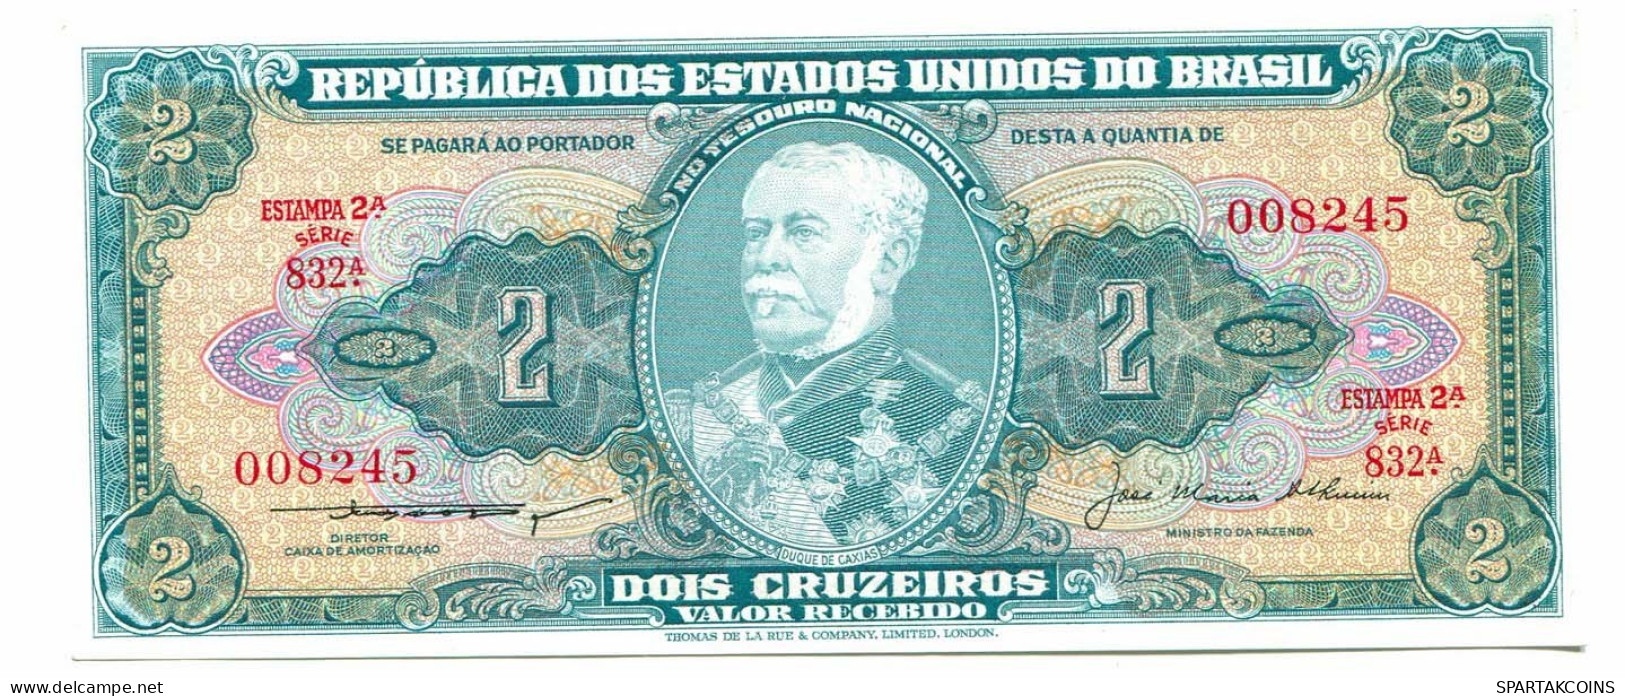 BRASIL 2 CRUZEIROS 1955 SERIE 832A UNC Paper Money Banknote #P10828.4 - Lokale Ausgaben